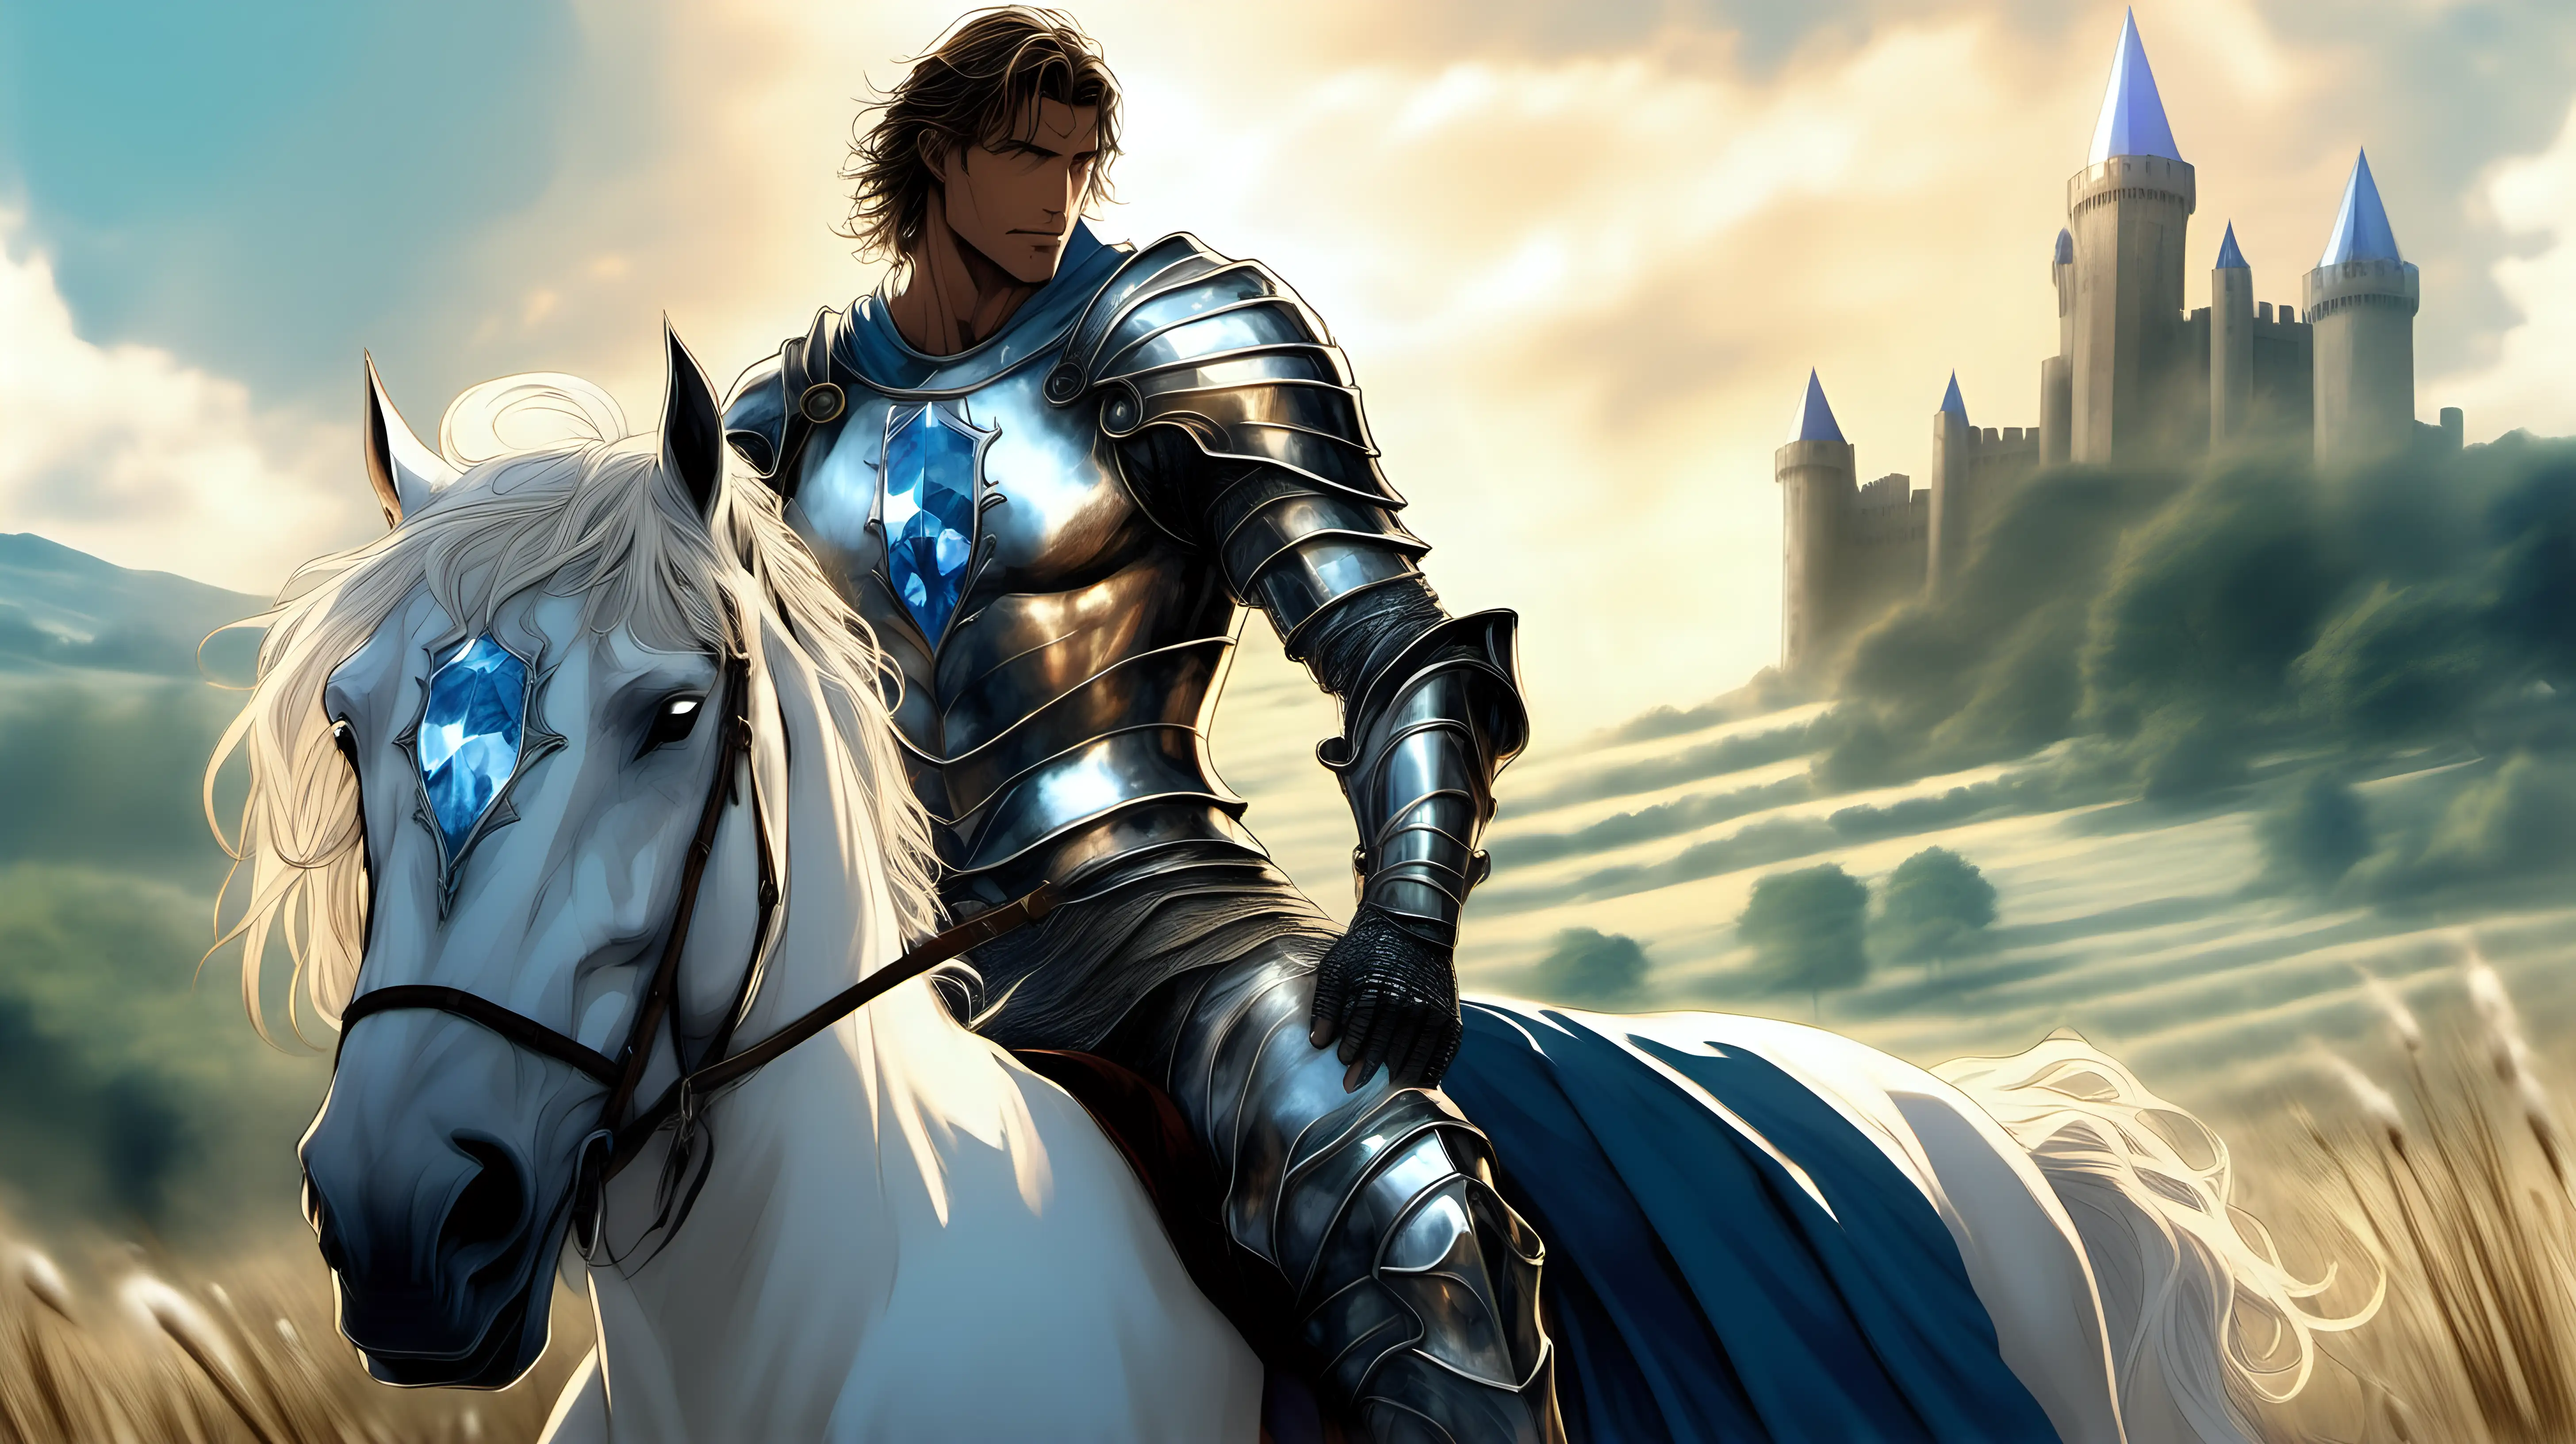 Muscular BlueEyed Knight Riding White Horse in Sunlit Castle Fields